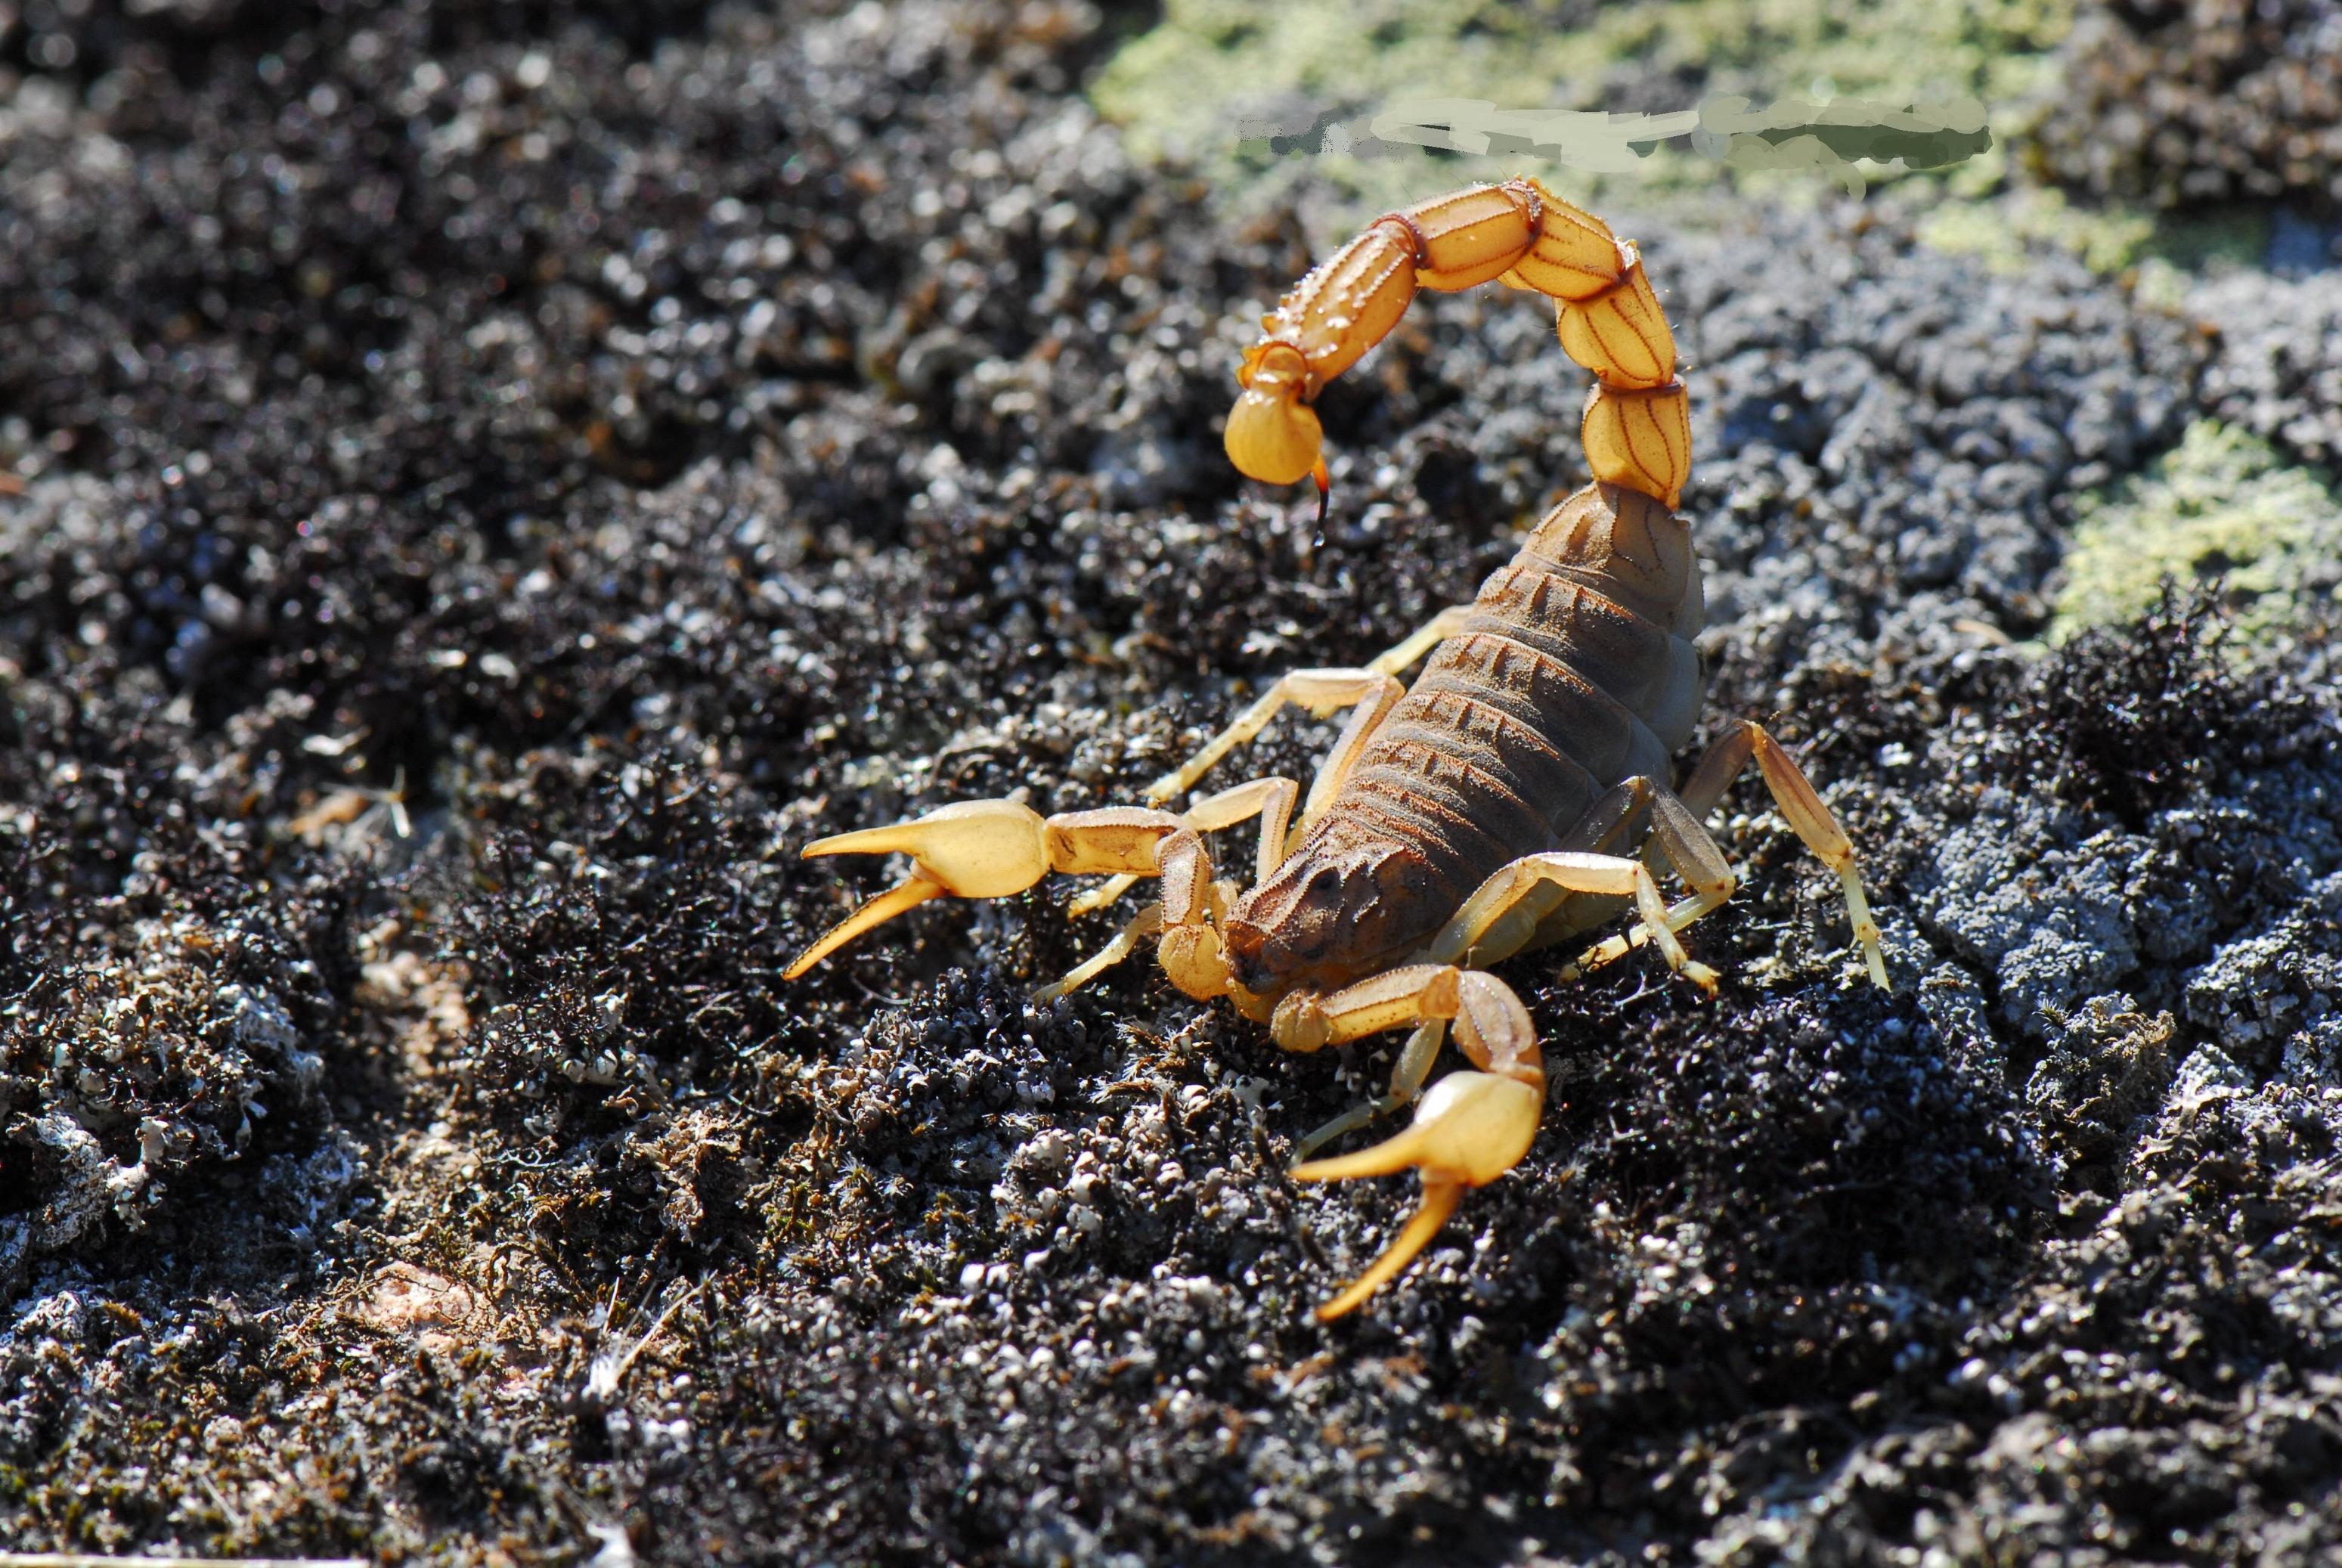 Scorpion HD Wallpaper. Scorpion Image Picture